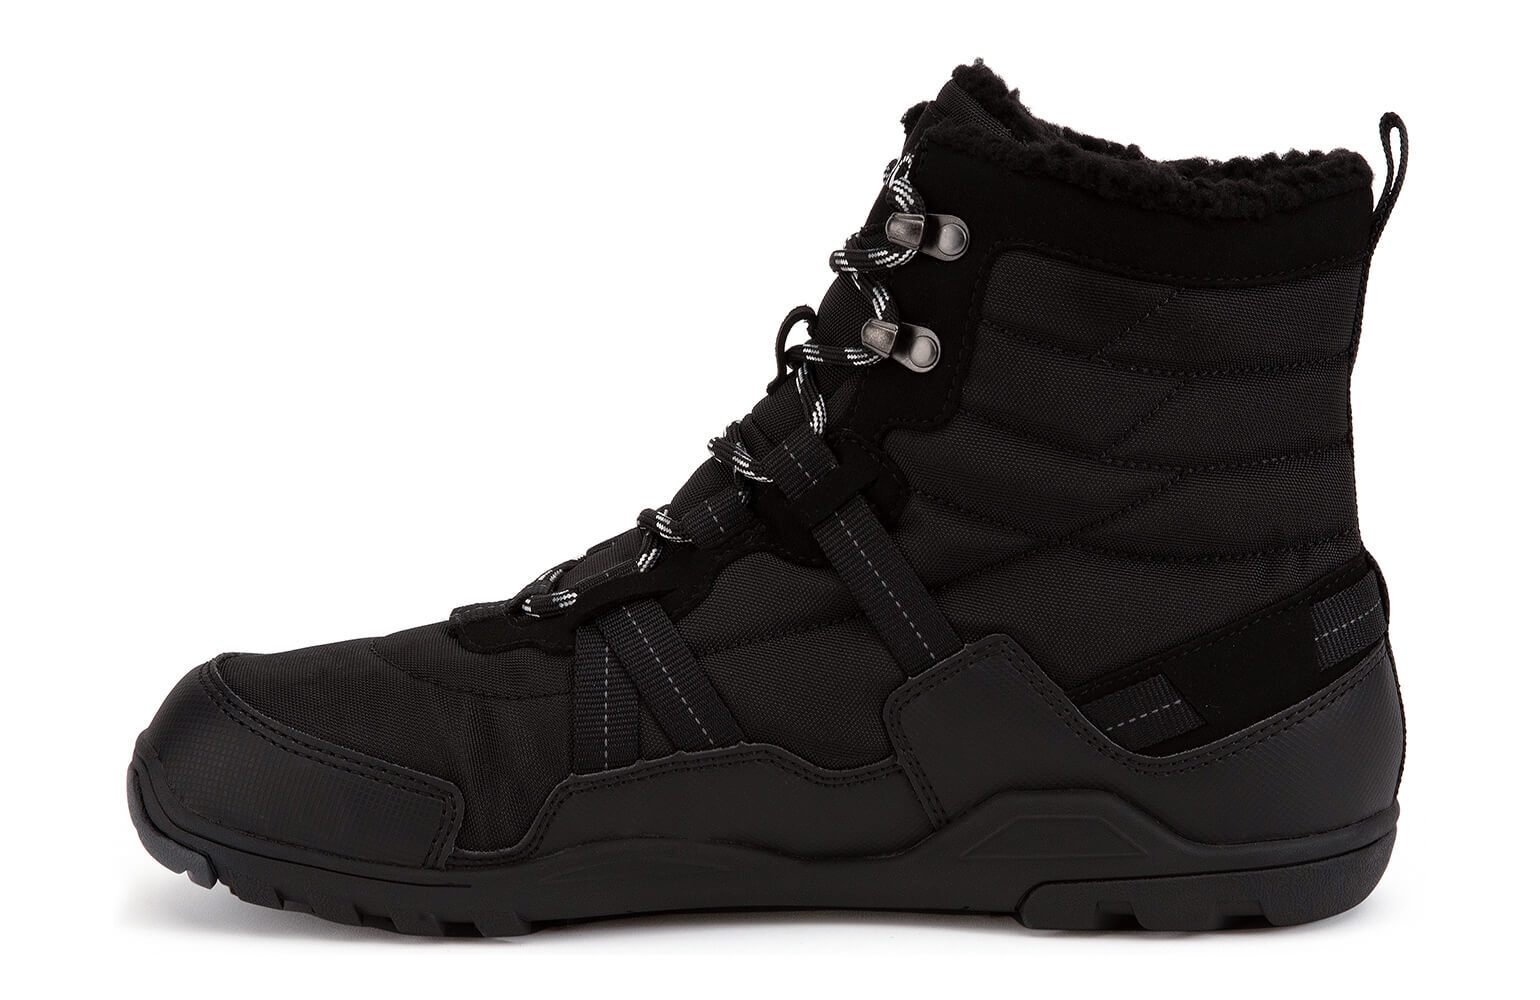 Xero Shoes | Alpine | black w/o trees [AEM-BLC] heren, maat 42.5 eu